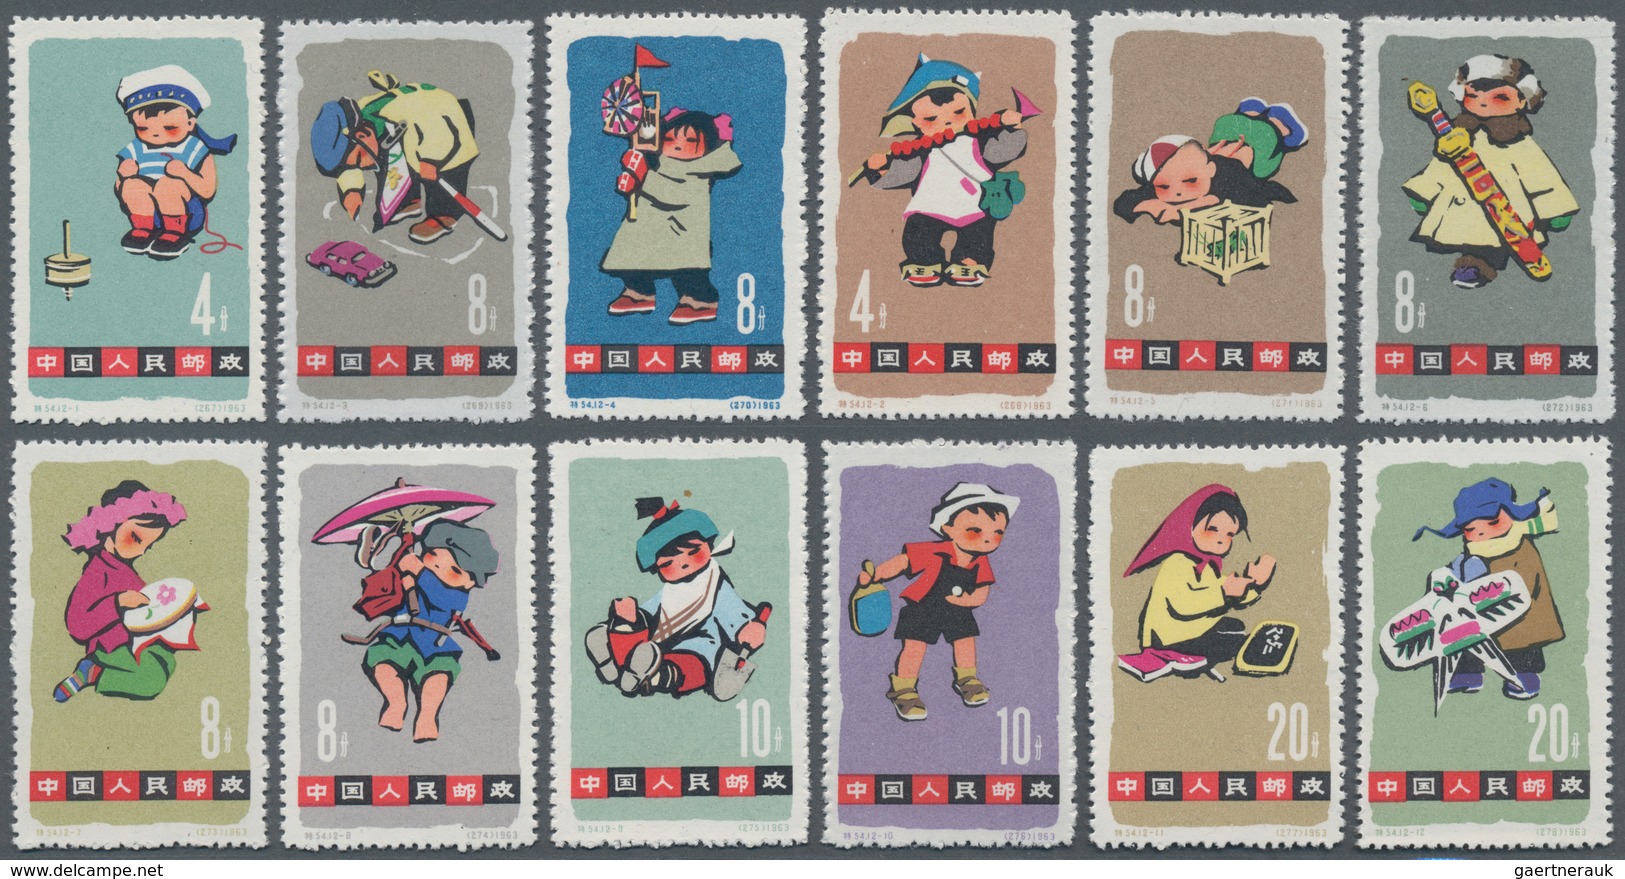 China - Volksrepublik: 1959/1963, six issues: Harvest block of four (C60) unused no gum as issued, C